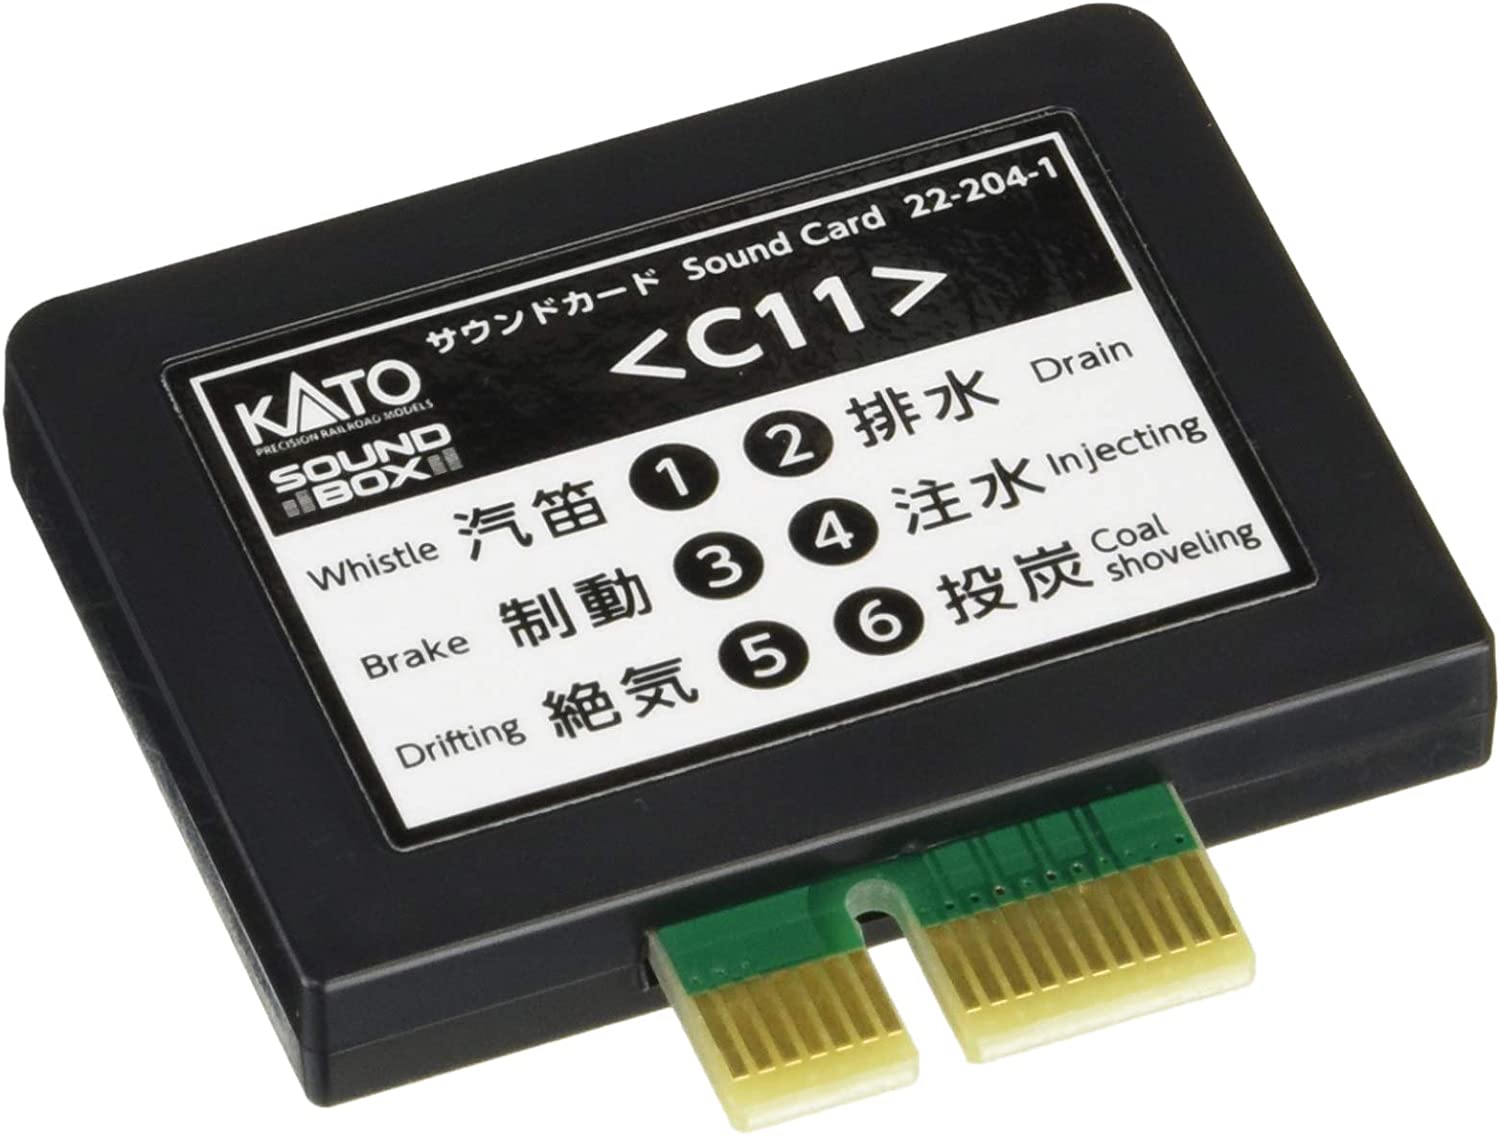 KATO N gauge sound card C11 22-204-1 model railroad supplies